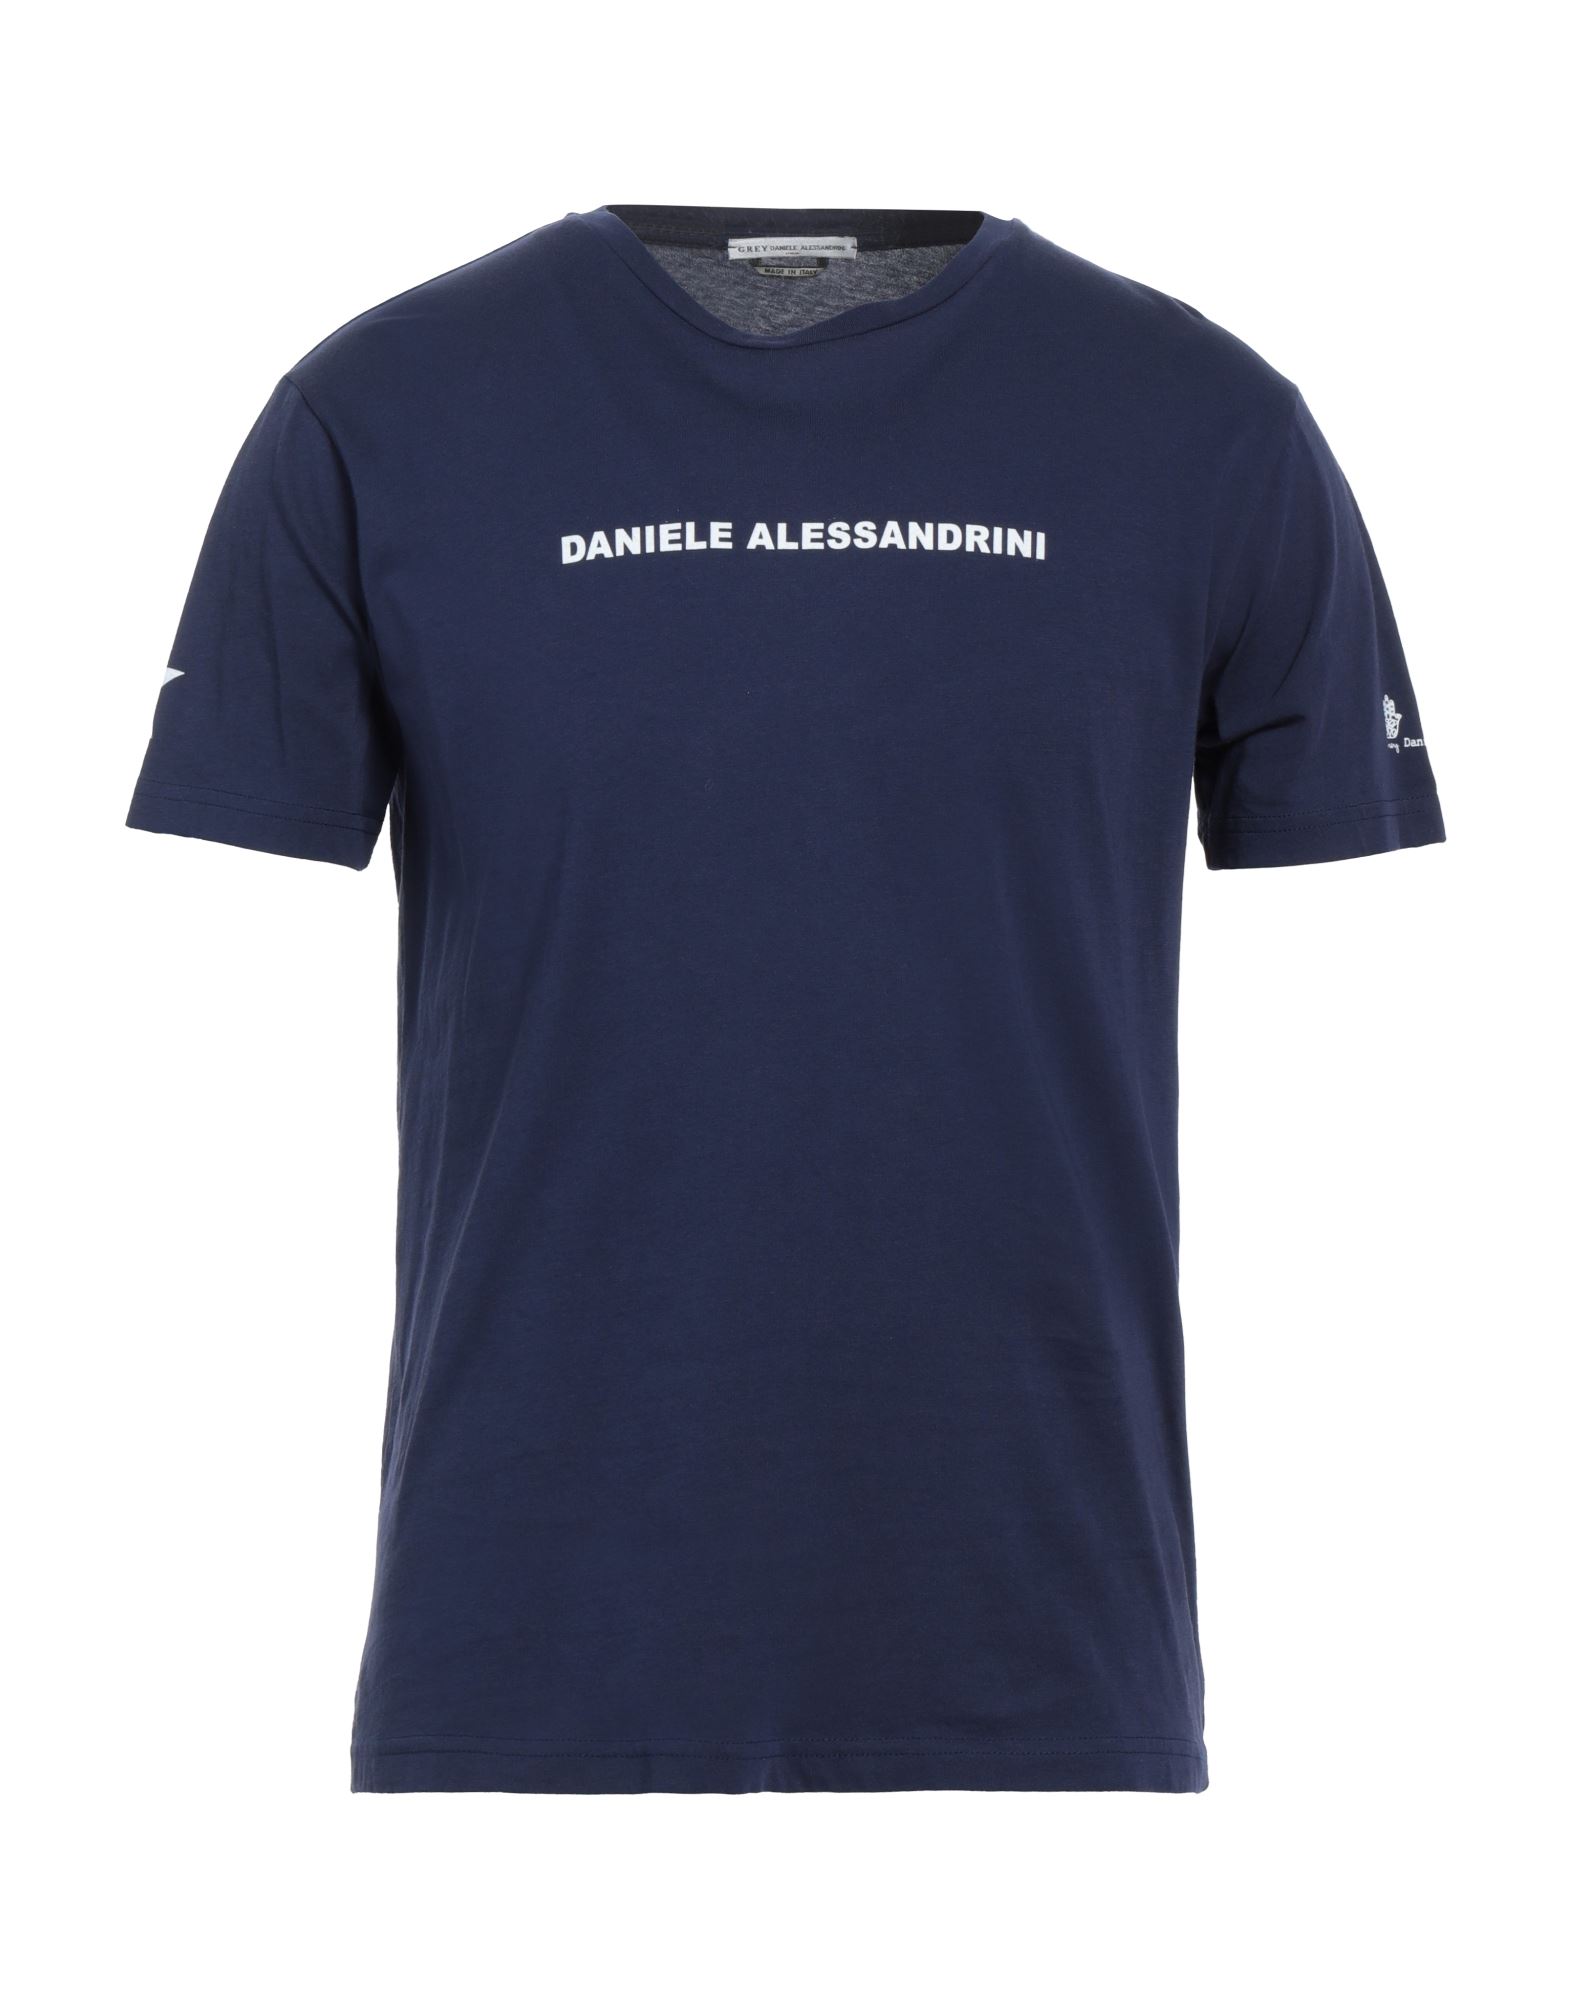 Grey Daniele Alessandrini T-shirts In Navy Blue